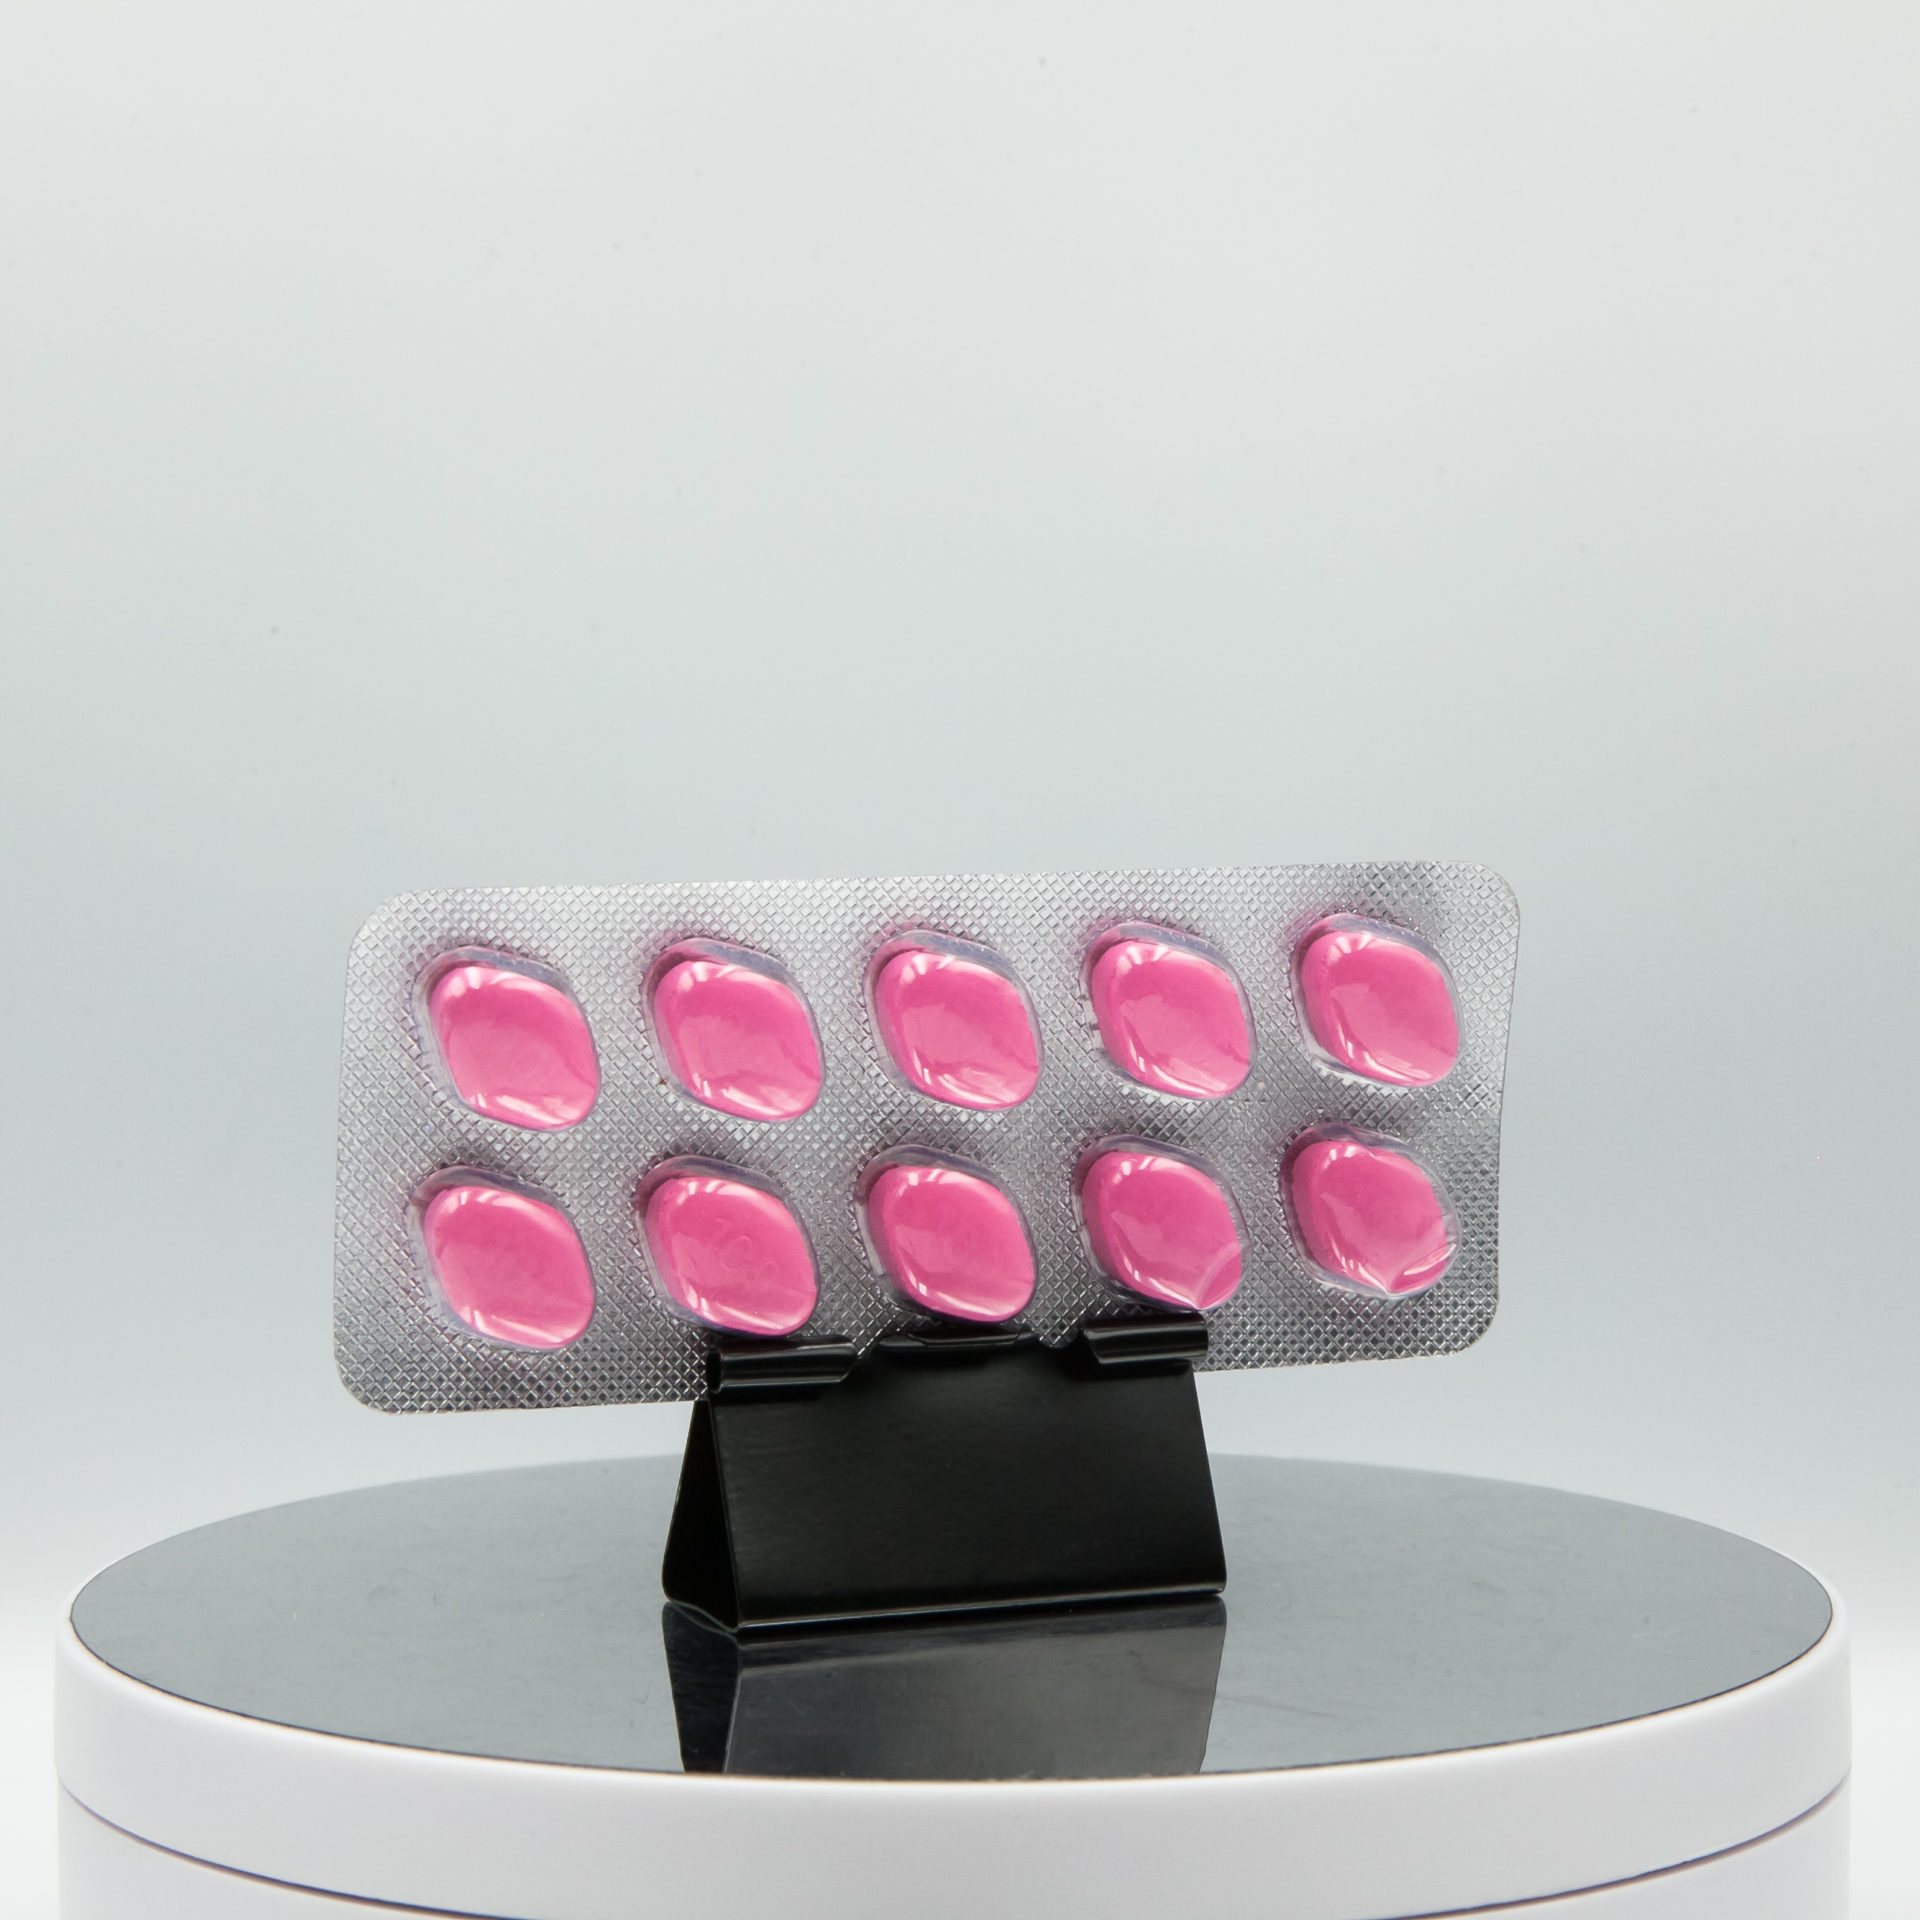 Cenforce-FM 100 mg Centurion Laboratories Sildenafil Citrate (Viagra generic) 3